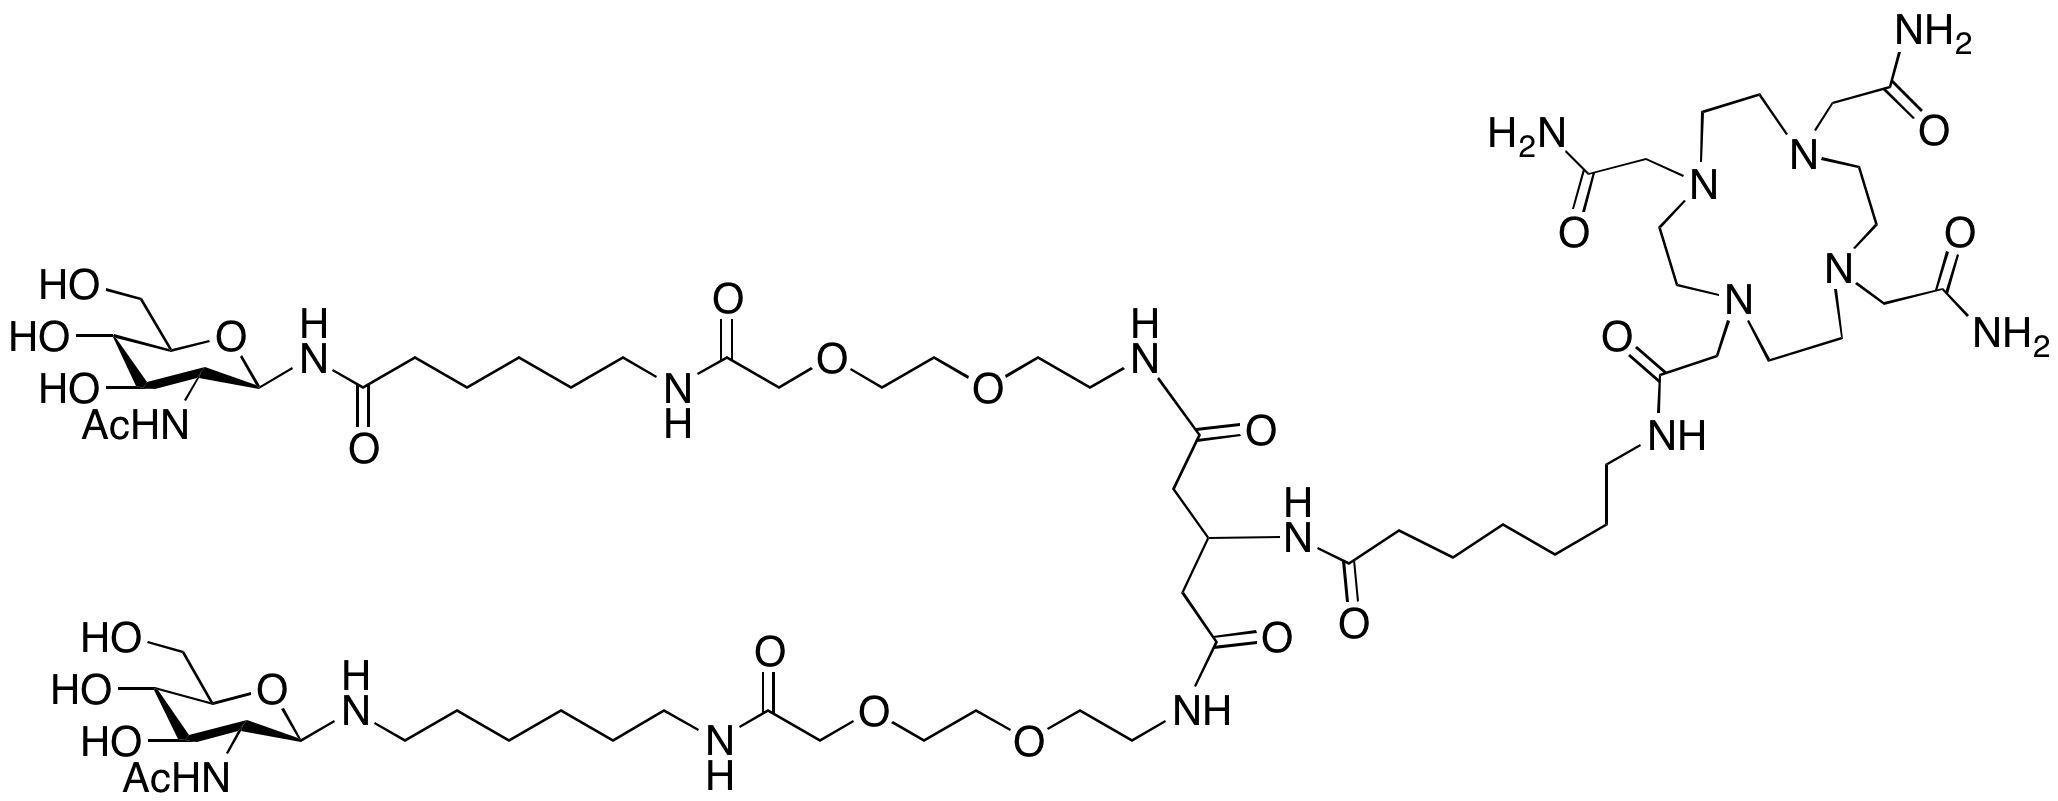 Glucosamine-AEEA linker-chelator(DOTAM)